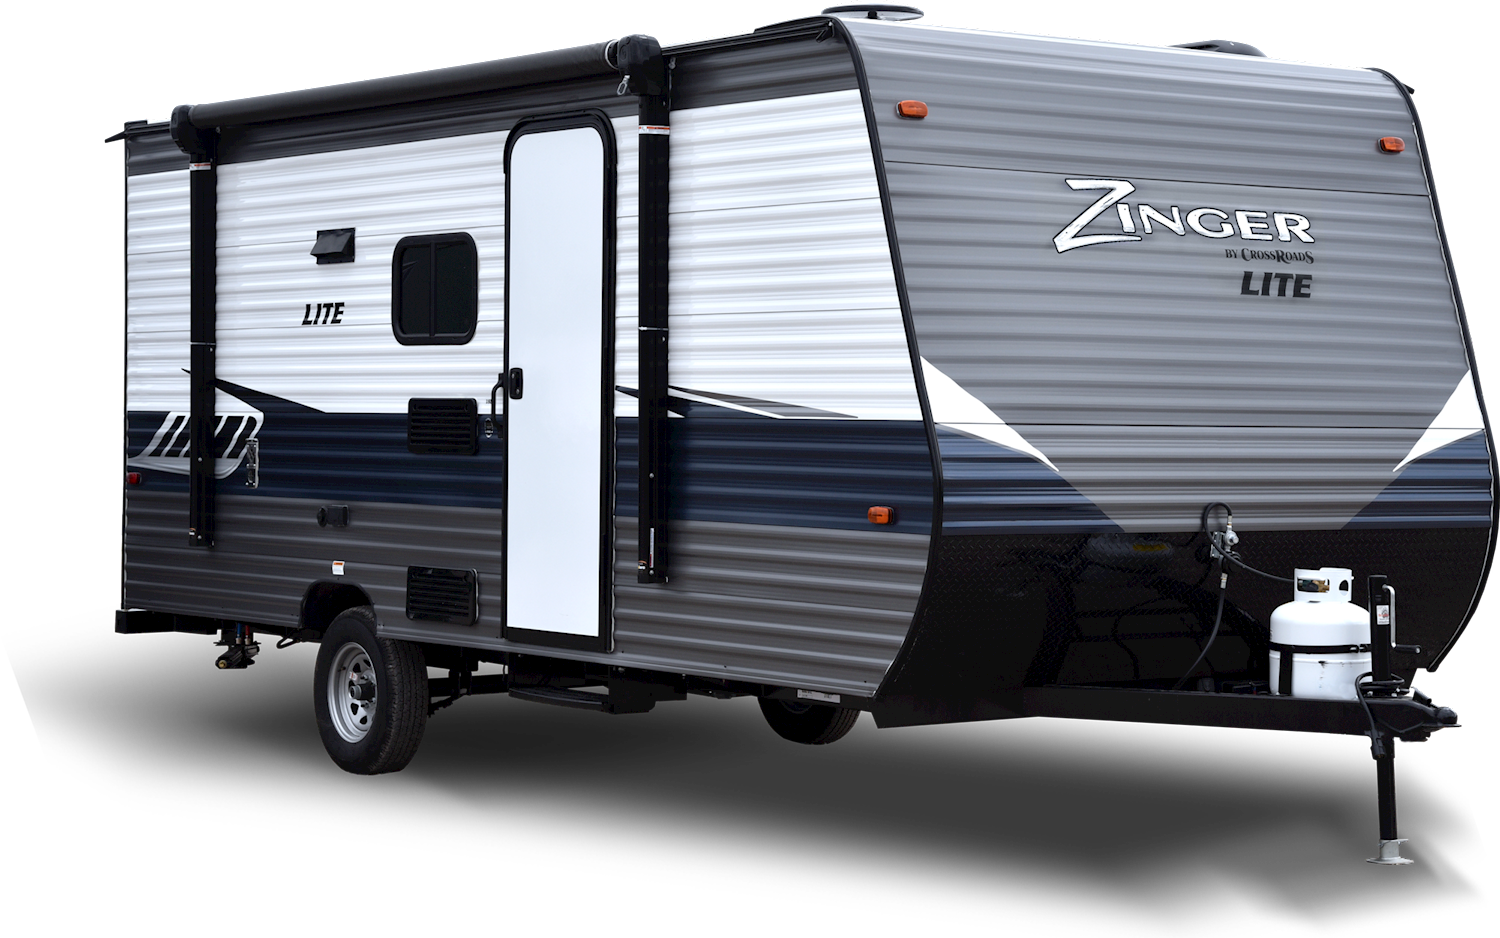 Zinger Lite 18bh Camping Travel Trailer